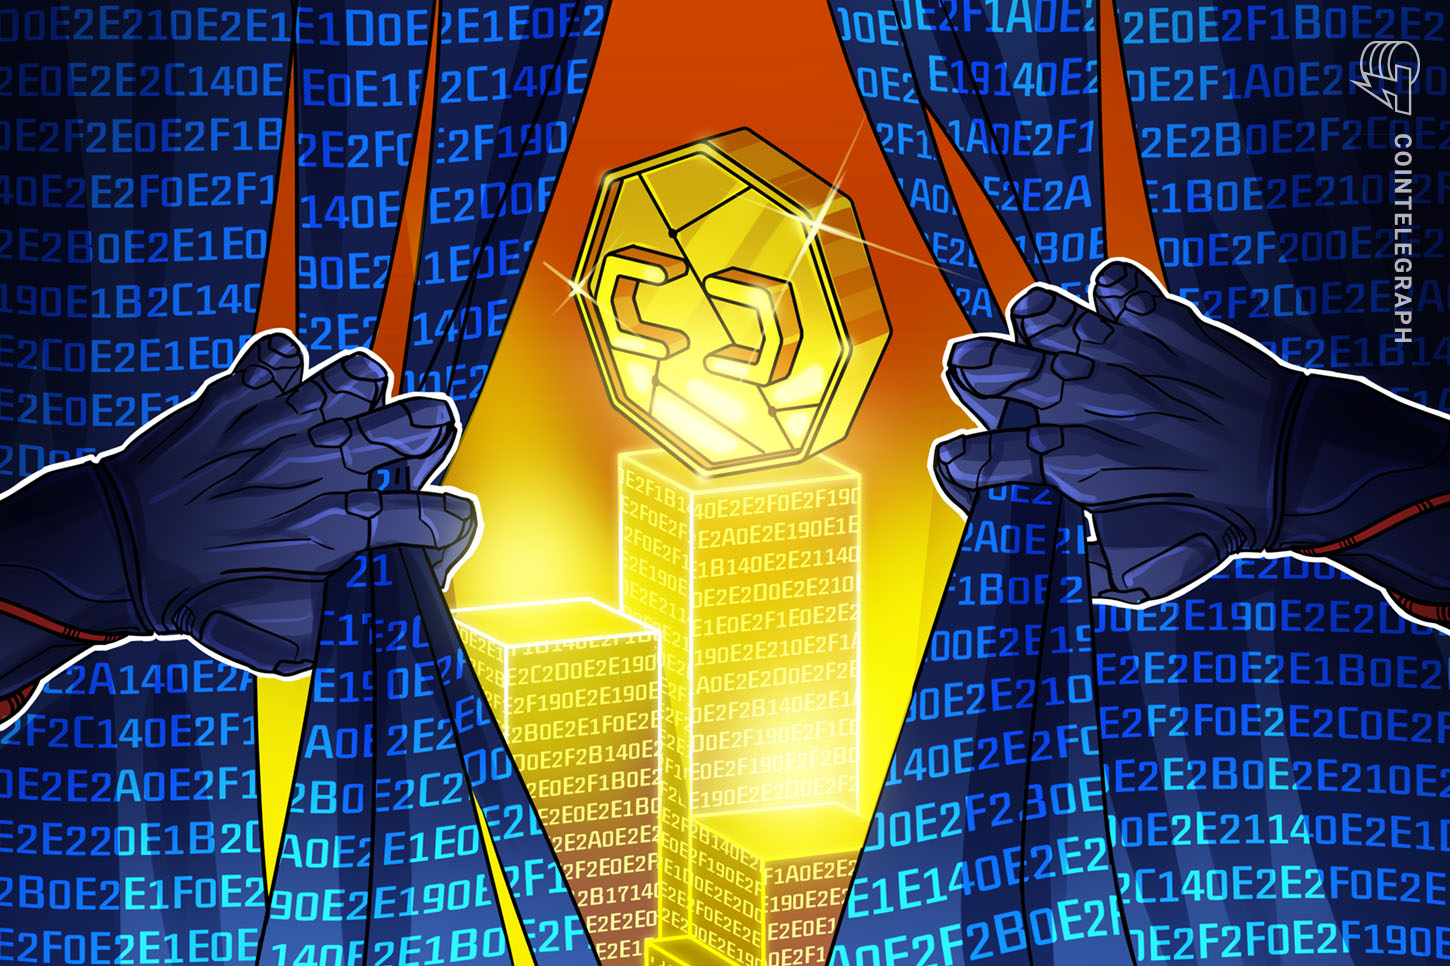 Ukrainian Hacker Caught Promoting Authorities Databases for Crypto